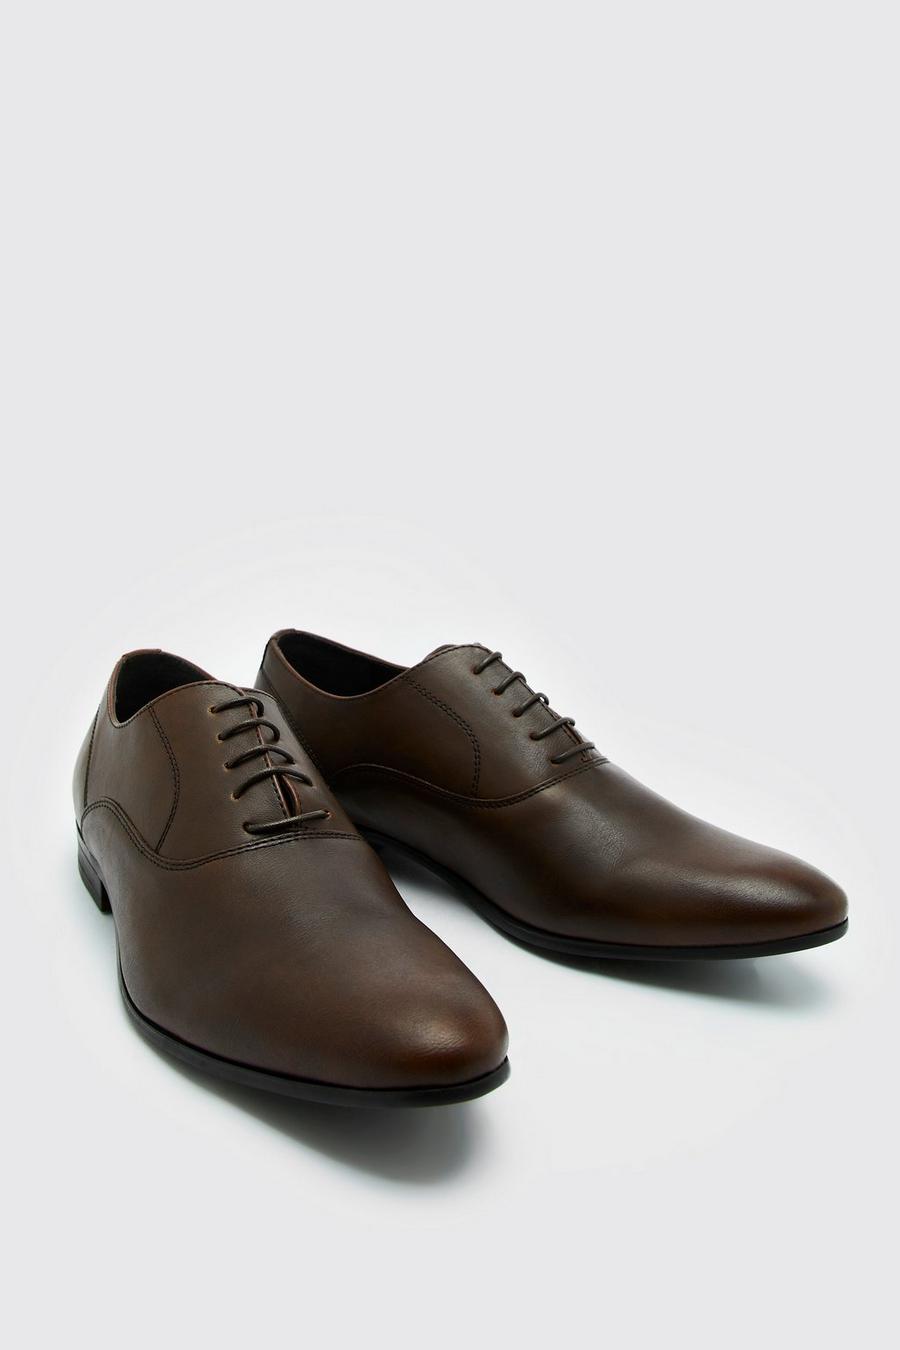 Kunstleder Oxford-Schuhe, Chocolate marron